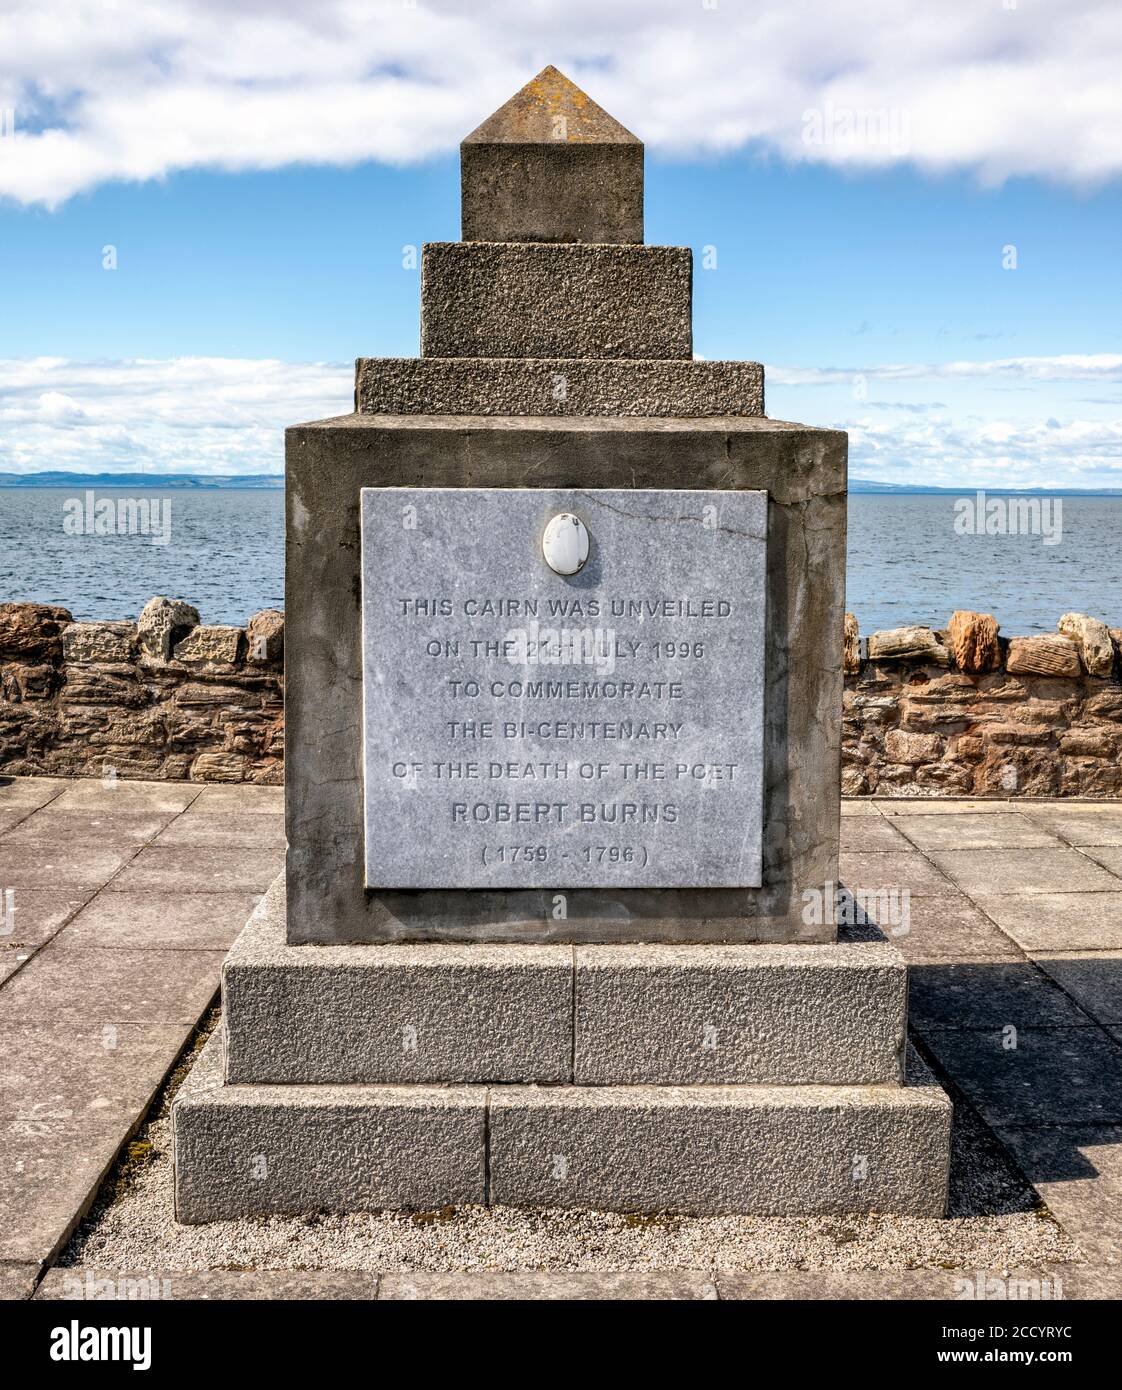 Cairn commemorating the Bi-Centenary of the death of Robert Burns, Prestonpans, East Lothian, Scotland, UK. Stock Photo